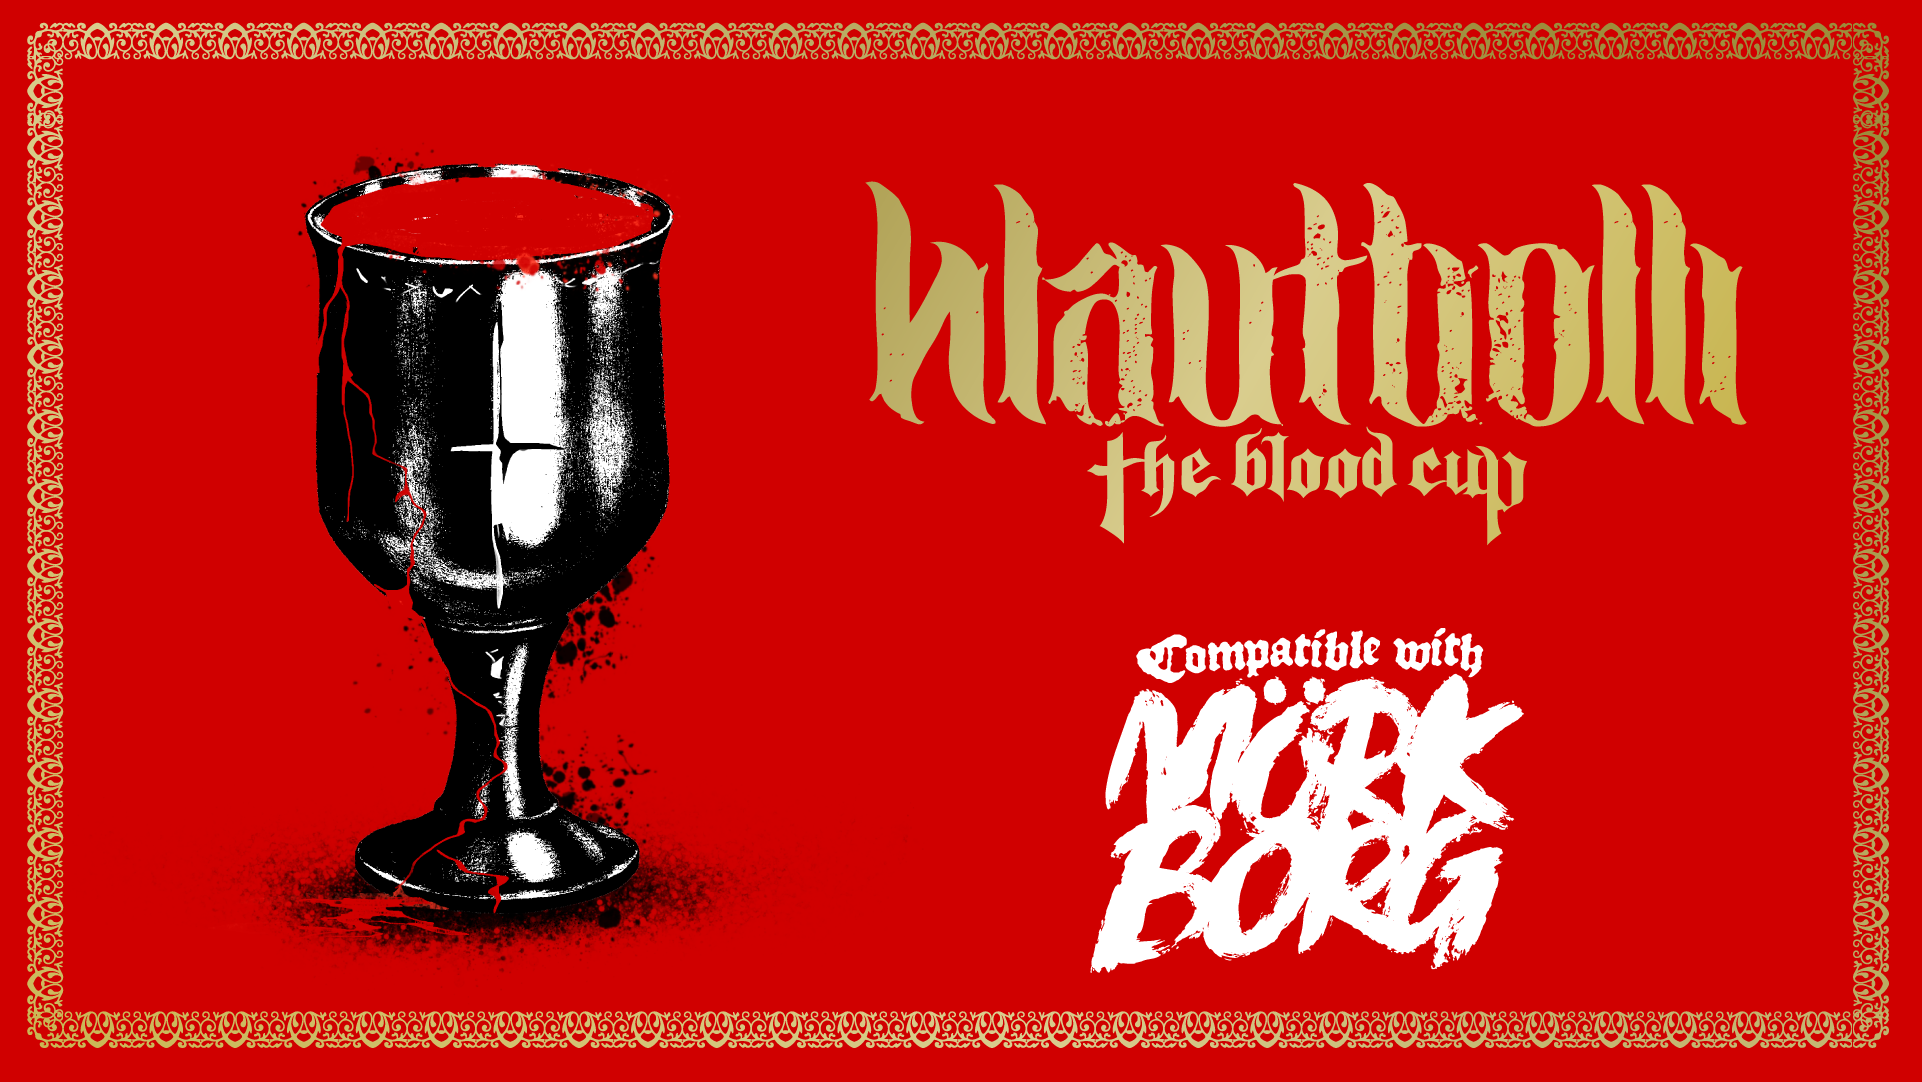 Hlautbolli: The Blood Cup